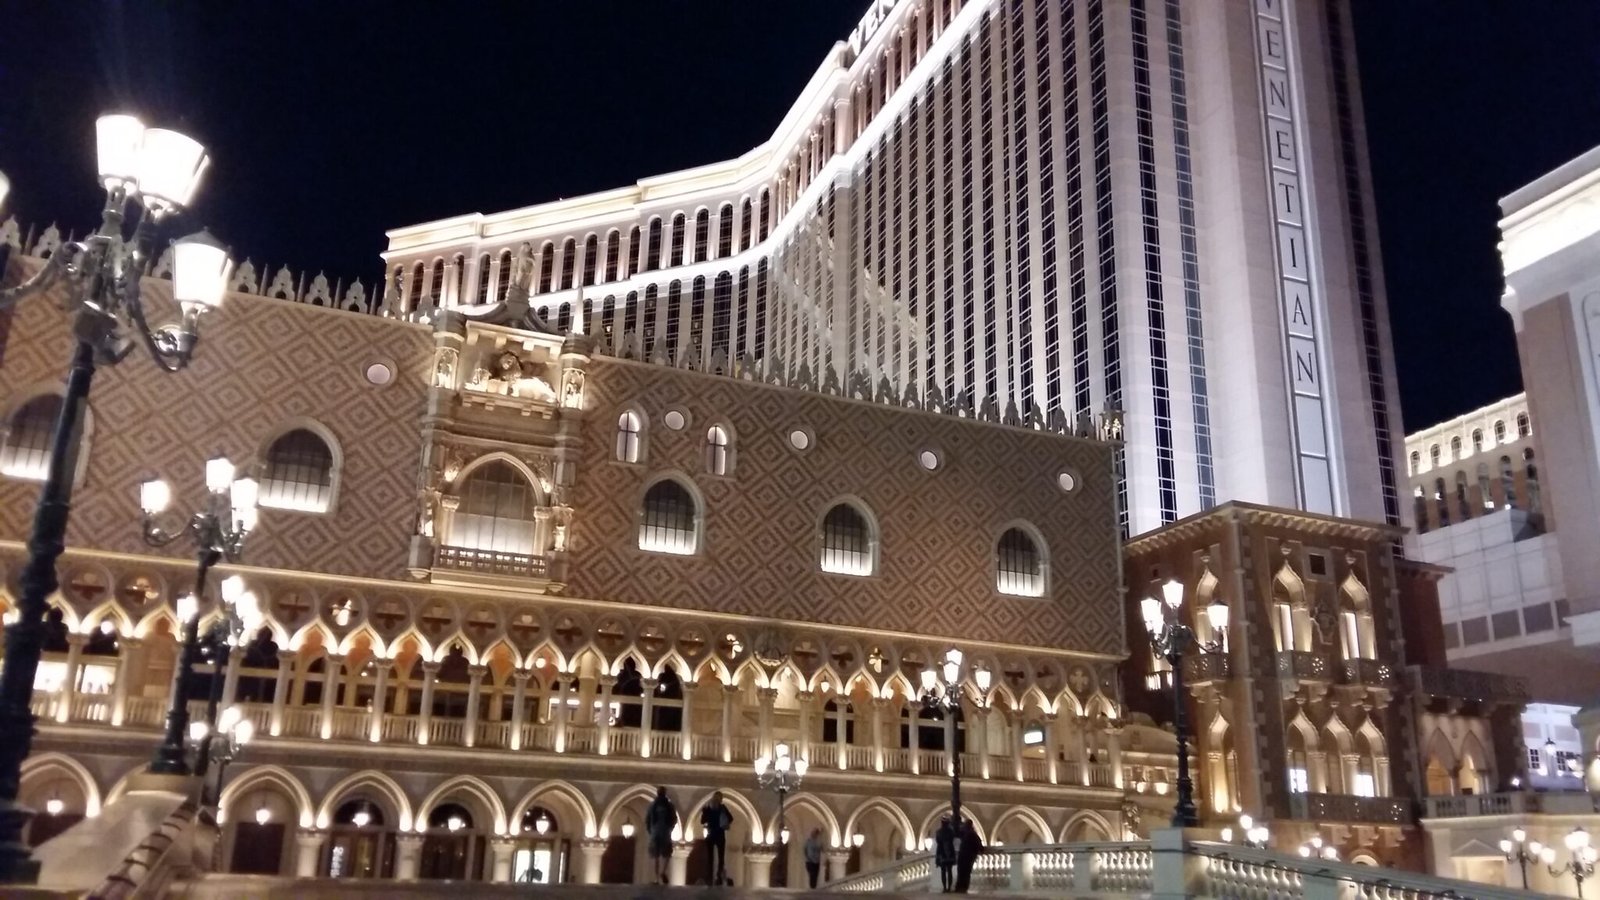 The Grand Venetian and Palazzo hotels at Las Vegas